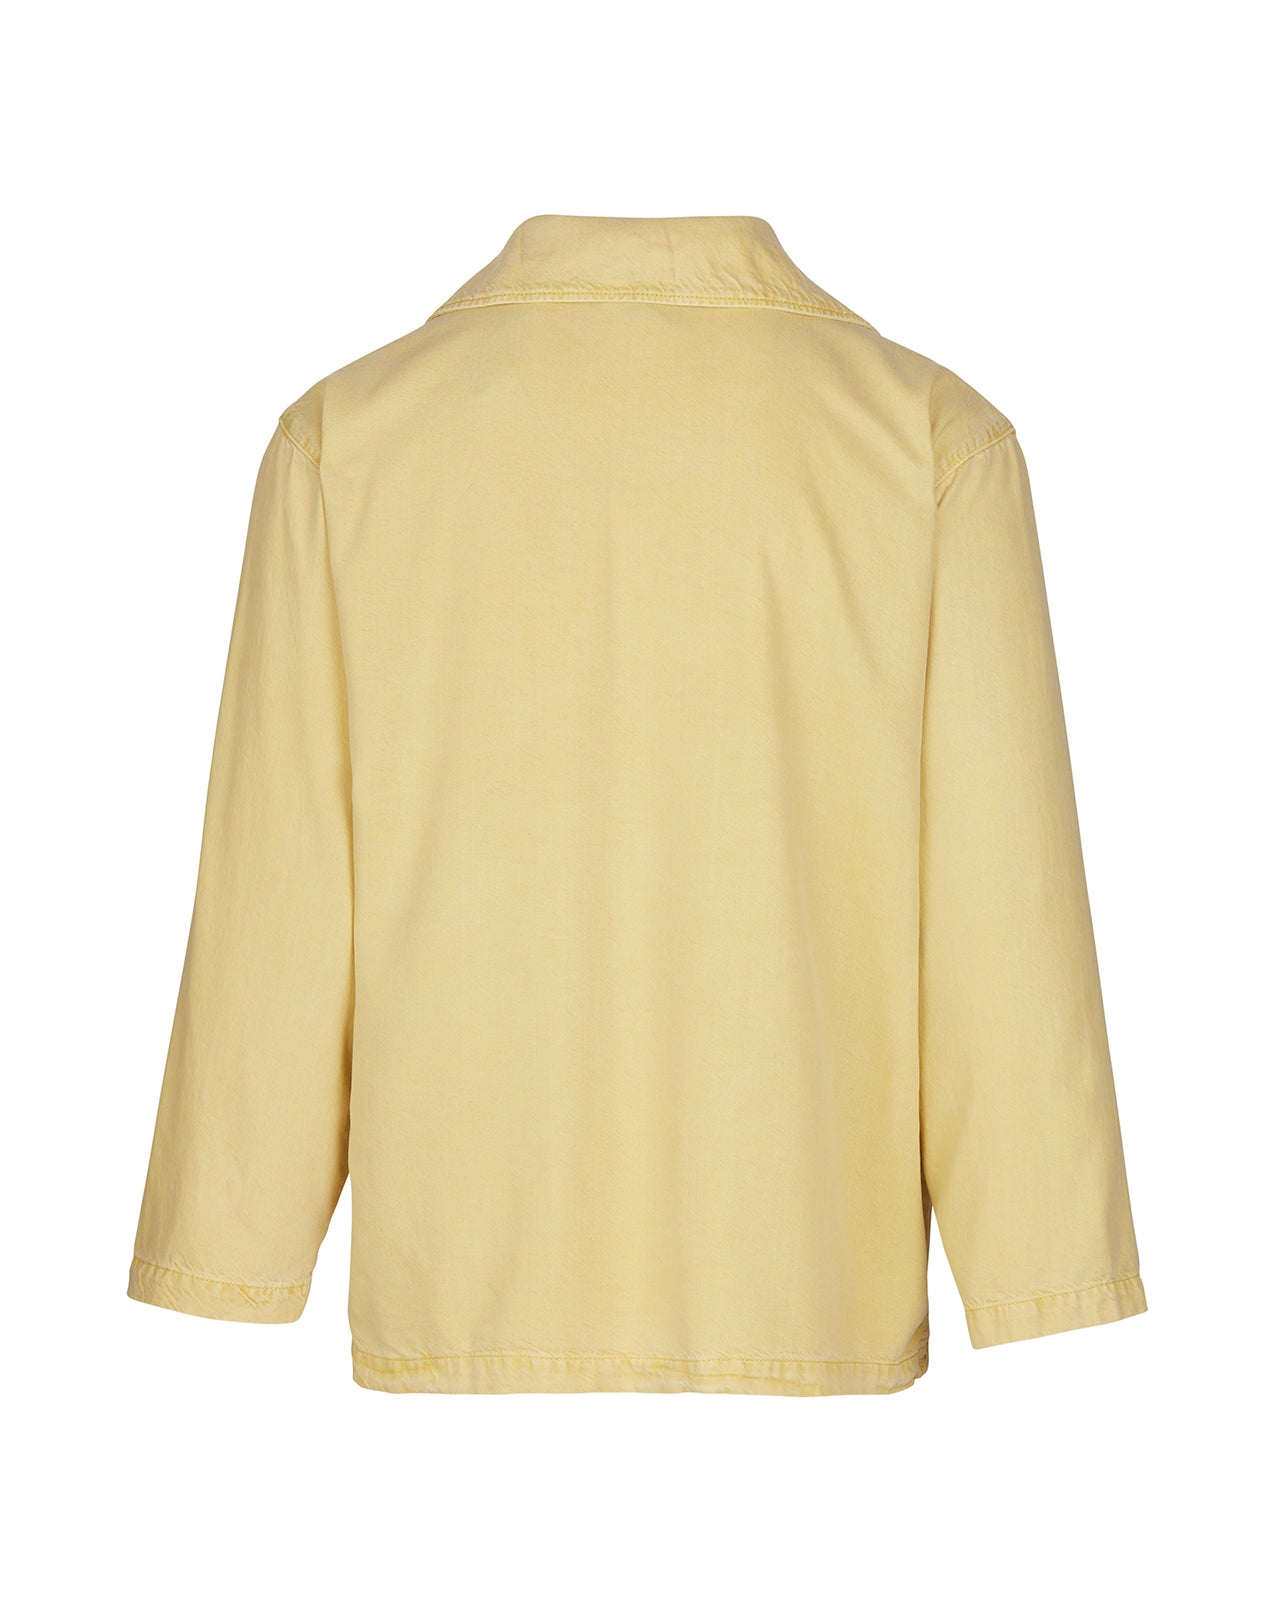 Tencel Shirt - Vintage Yellow